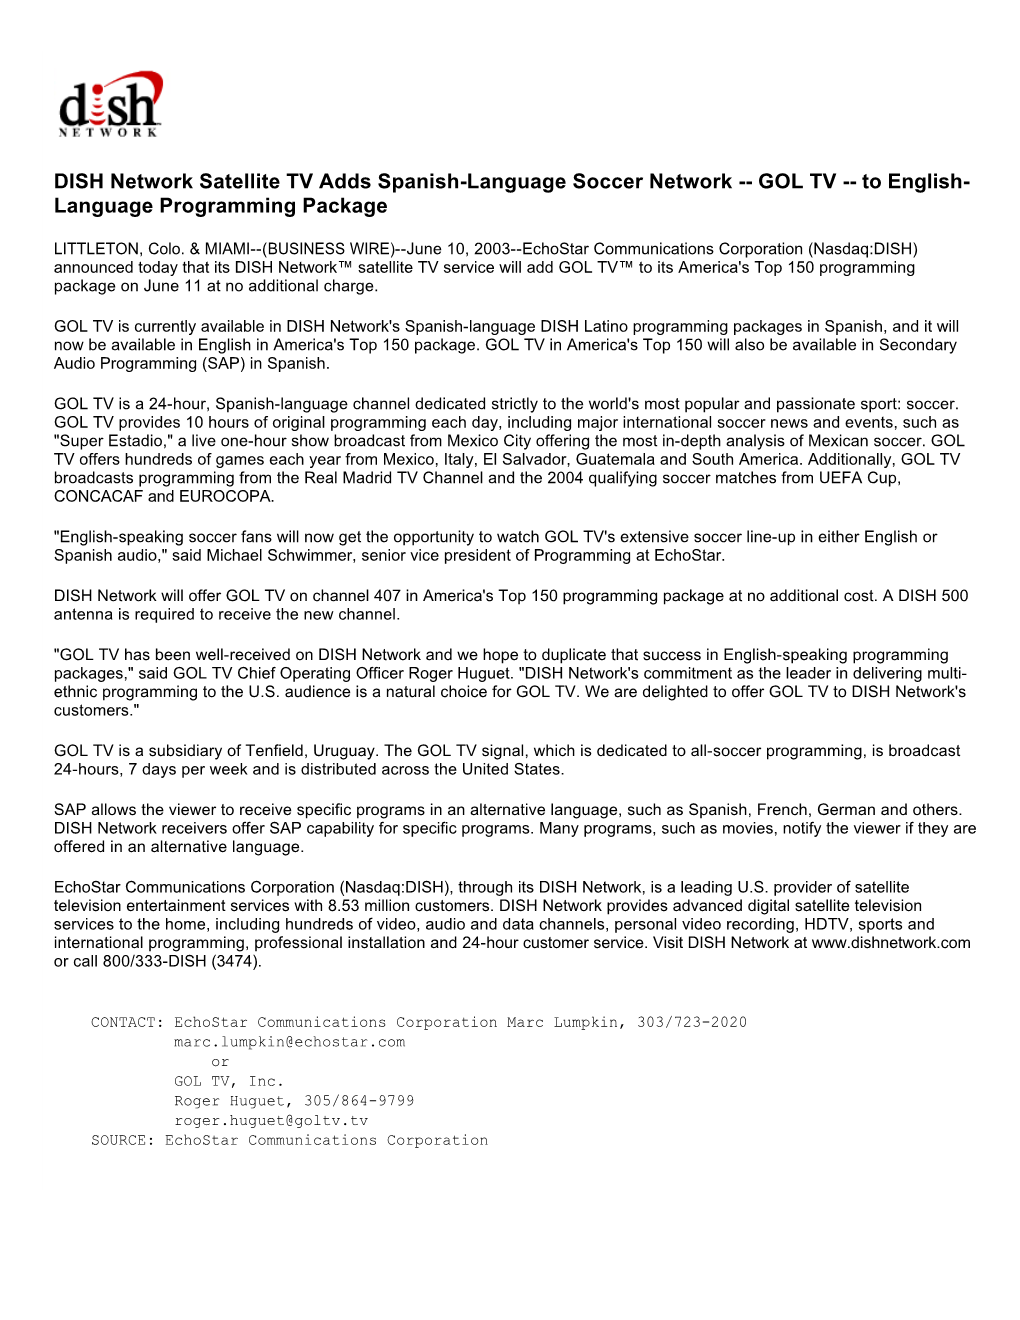 DISH Network Satellite TV Adds Spanish-Language Soccer Network -- GOL TV -- to English- Language Programming Package